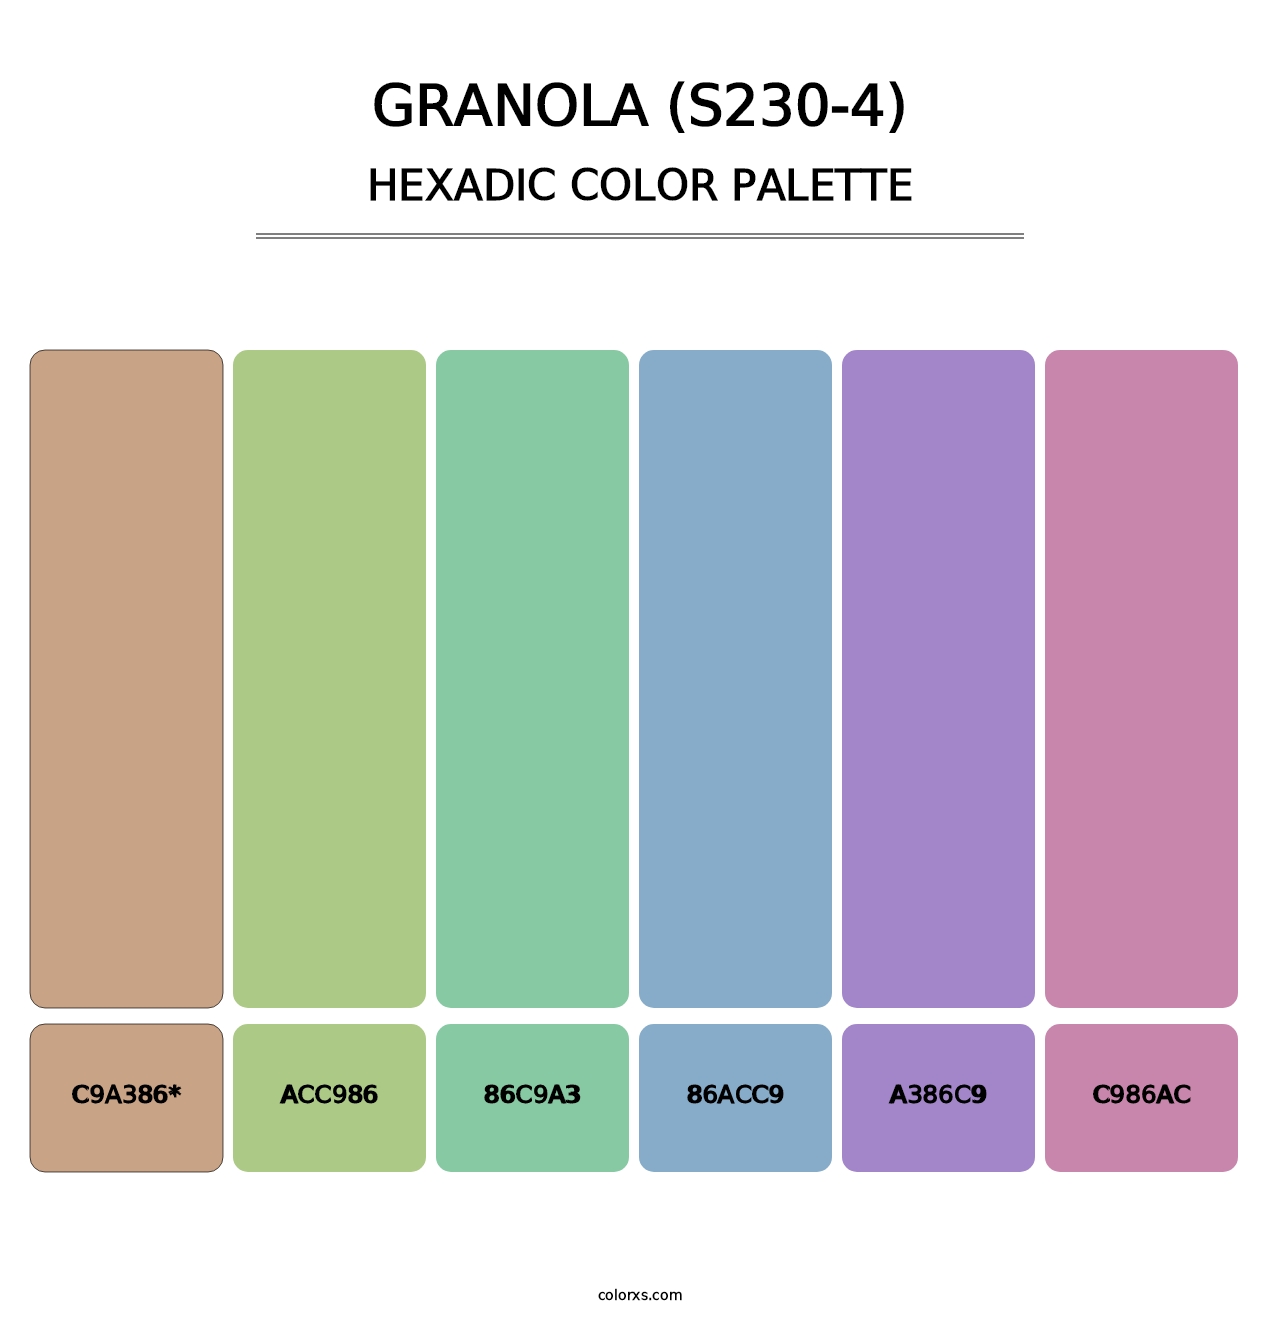 Granola (S230-4) - Hexadic Color Palette